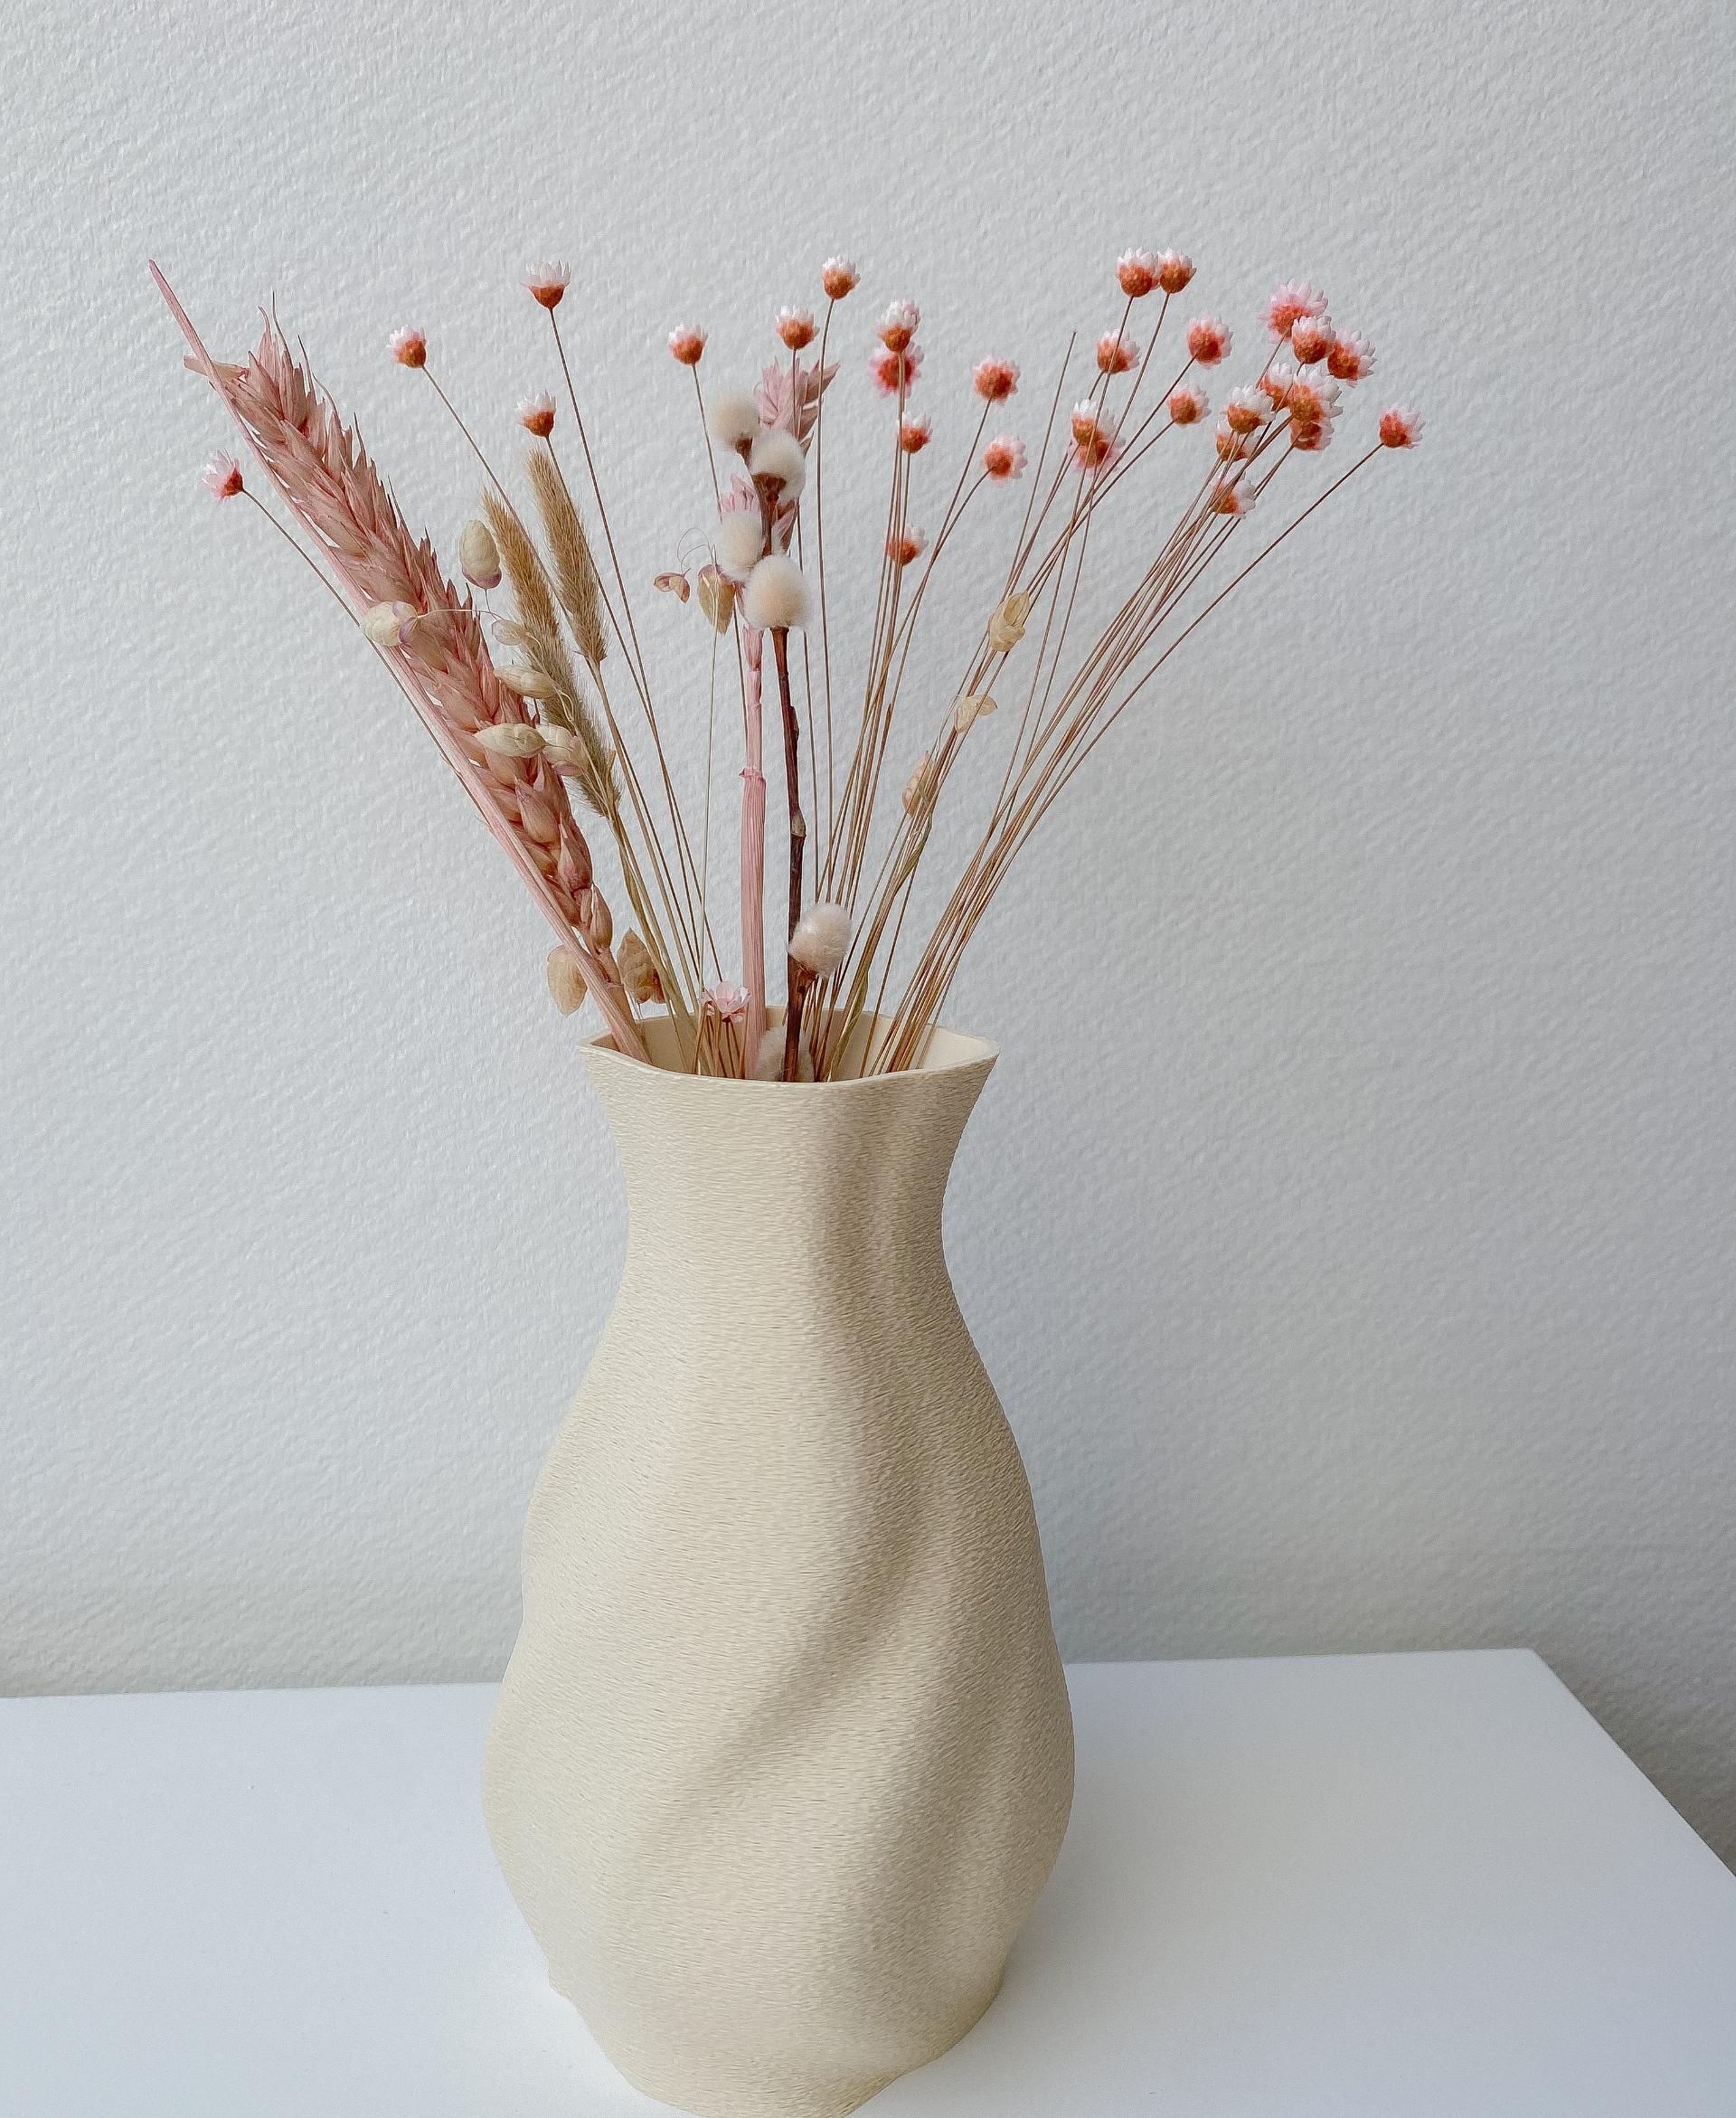 Vase 6.9 - Beautiful vase!
Fillamentum filament. - 3d model